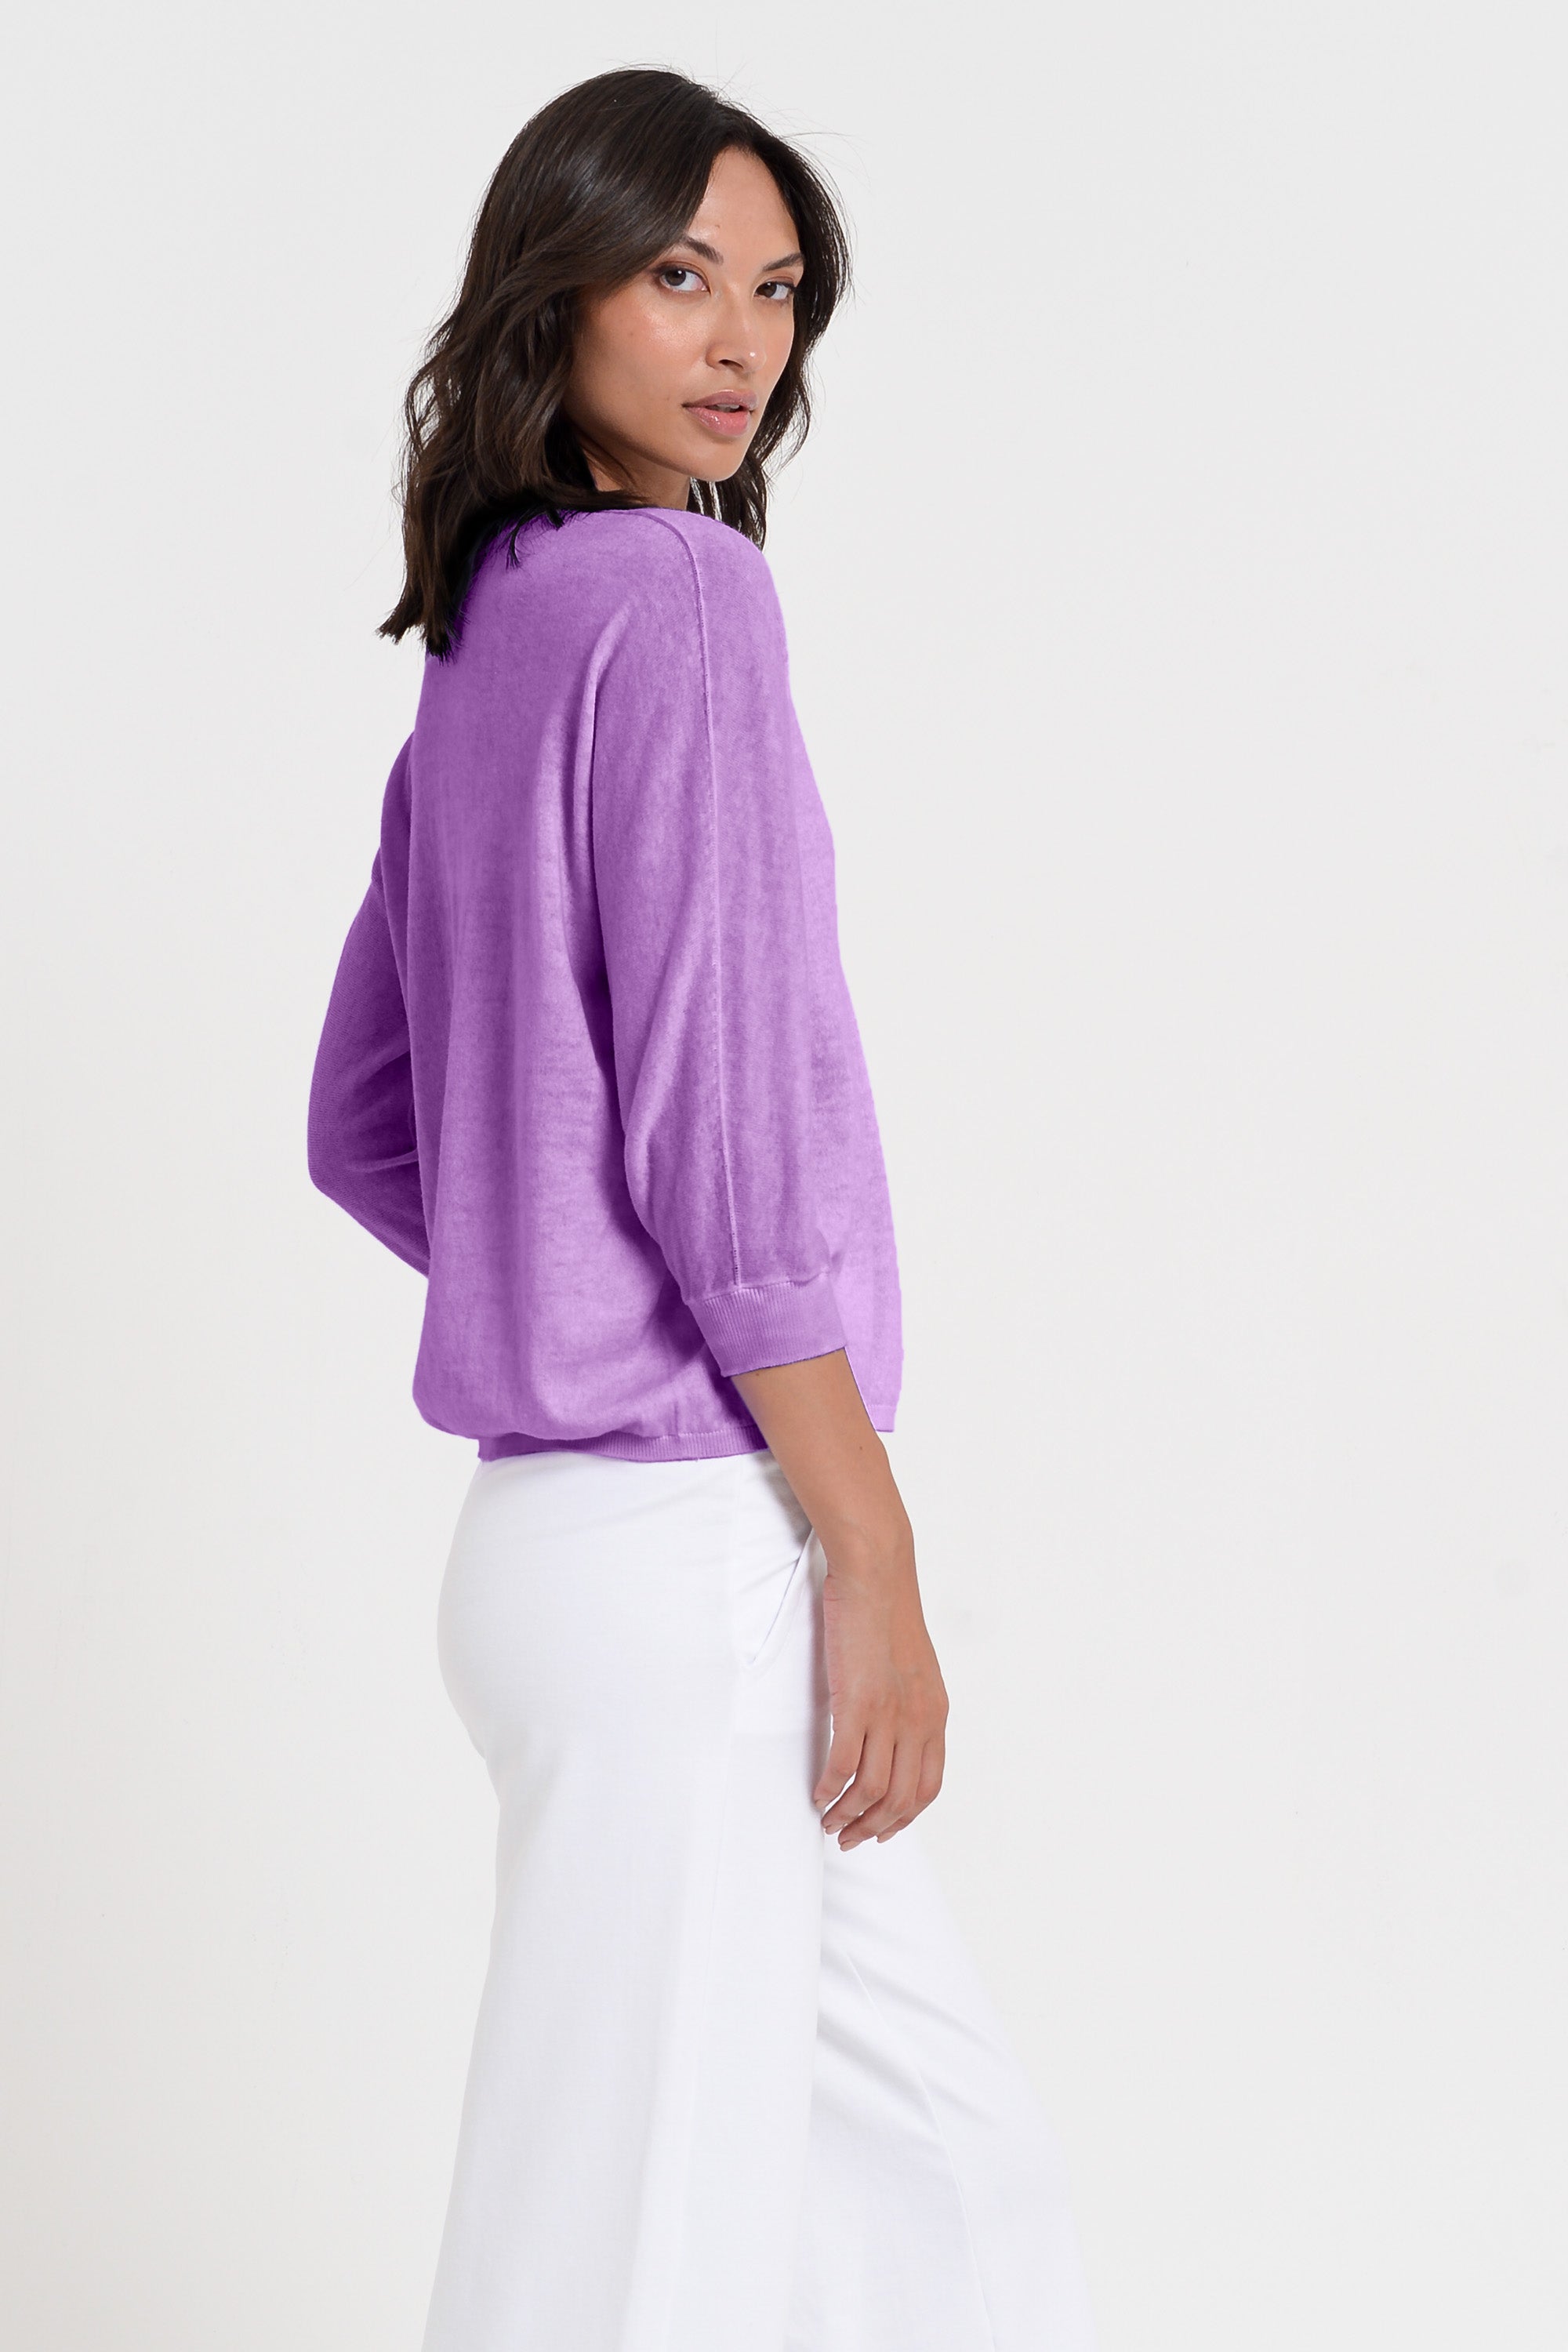 Anna V-Neck - Women's Short Sleeve Knit Sweater - Morado